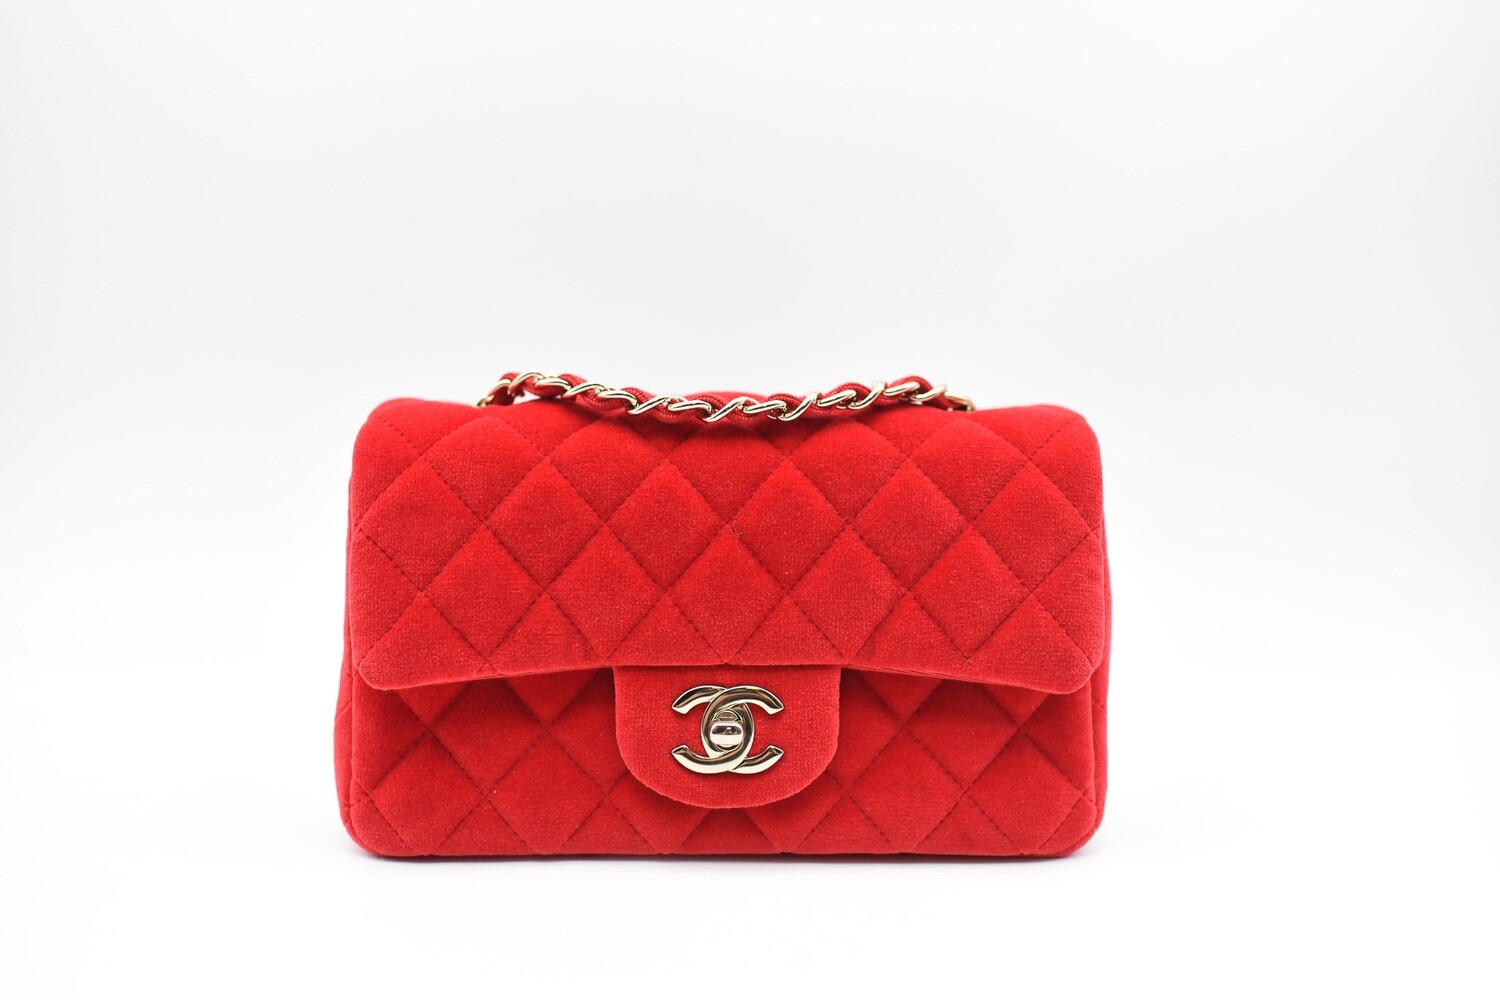 Chanel Velvet Classic Micro in Red Handbag - Authentic Pre-Owned Designer Handbags